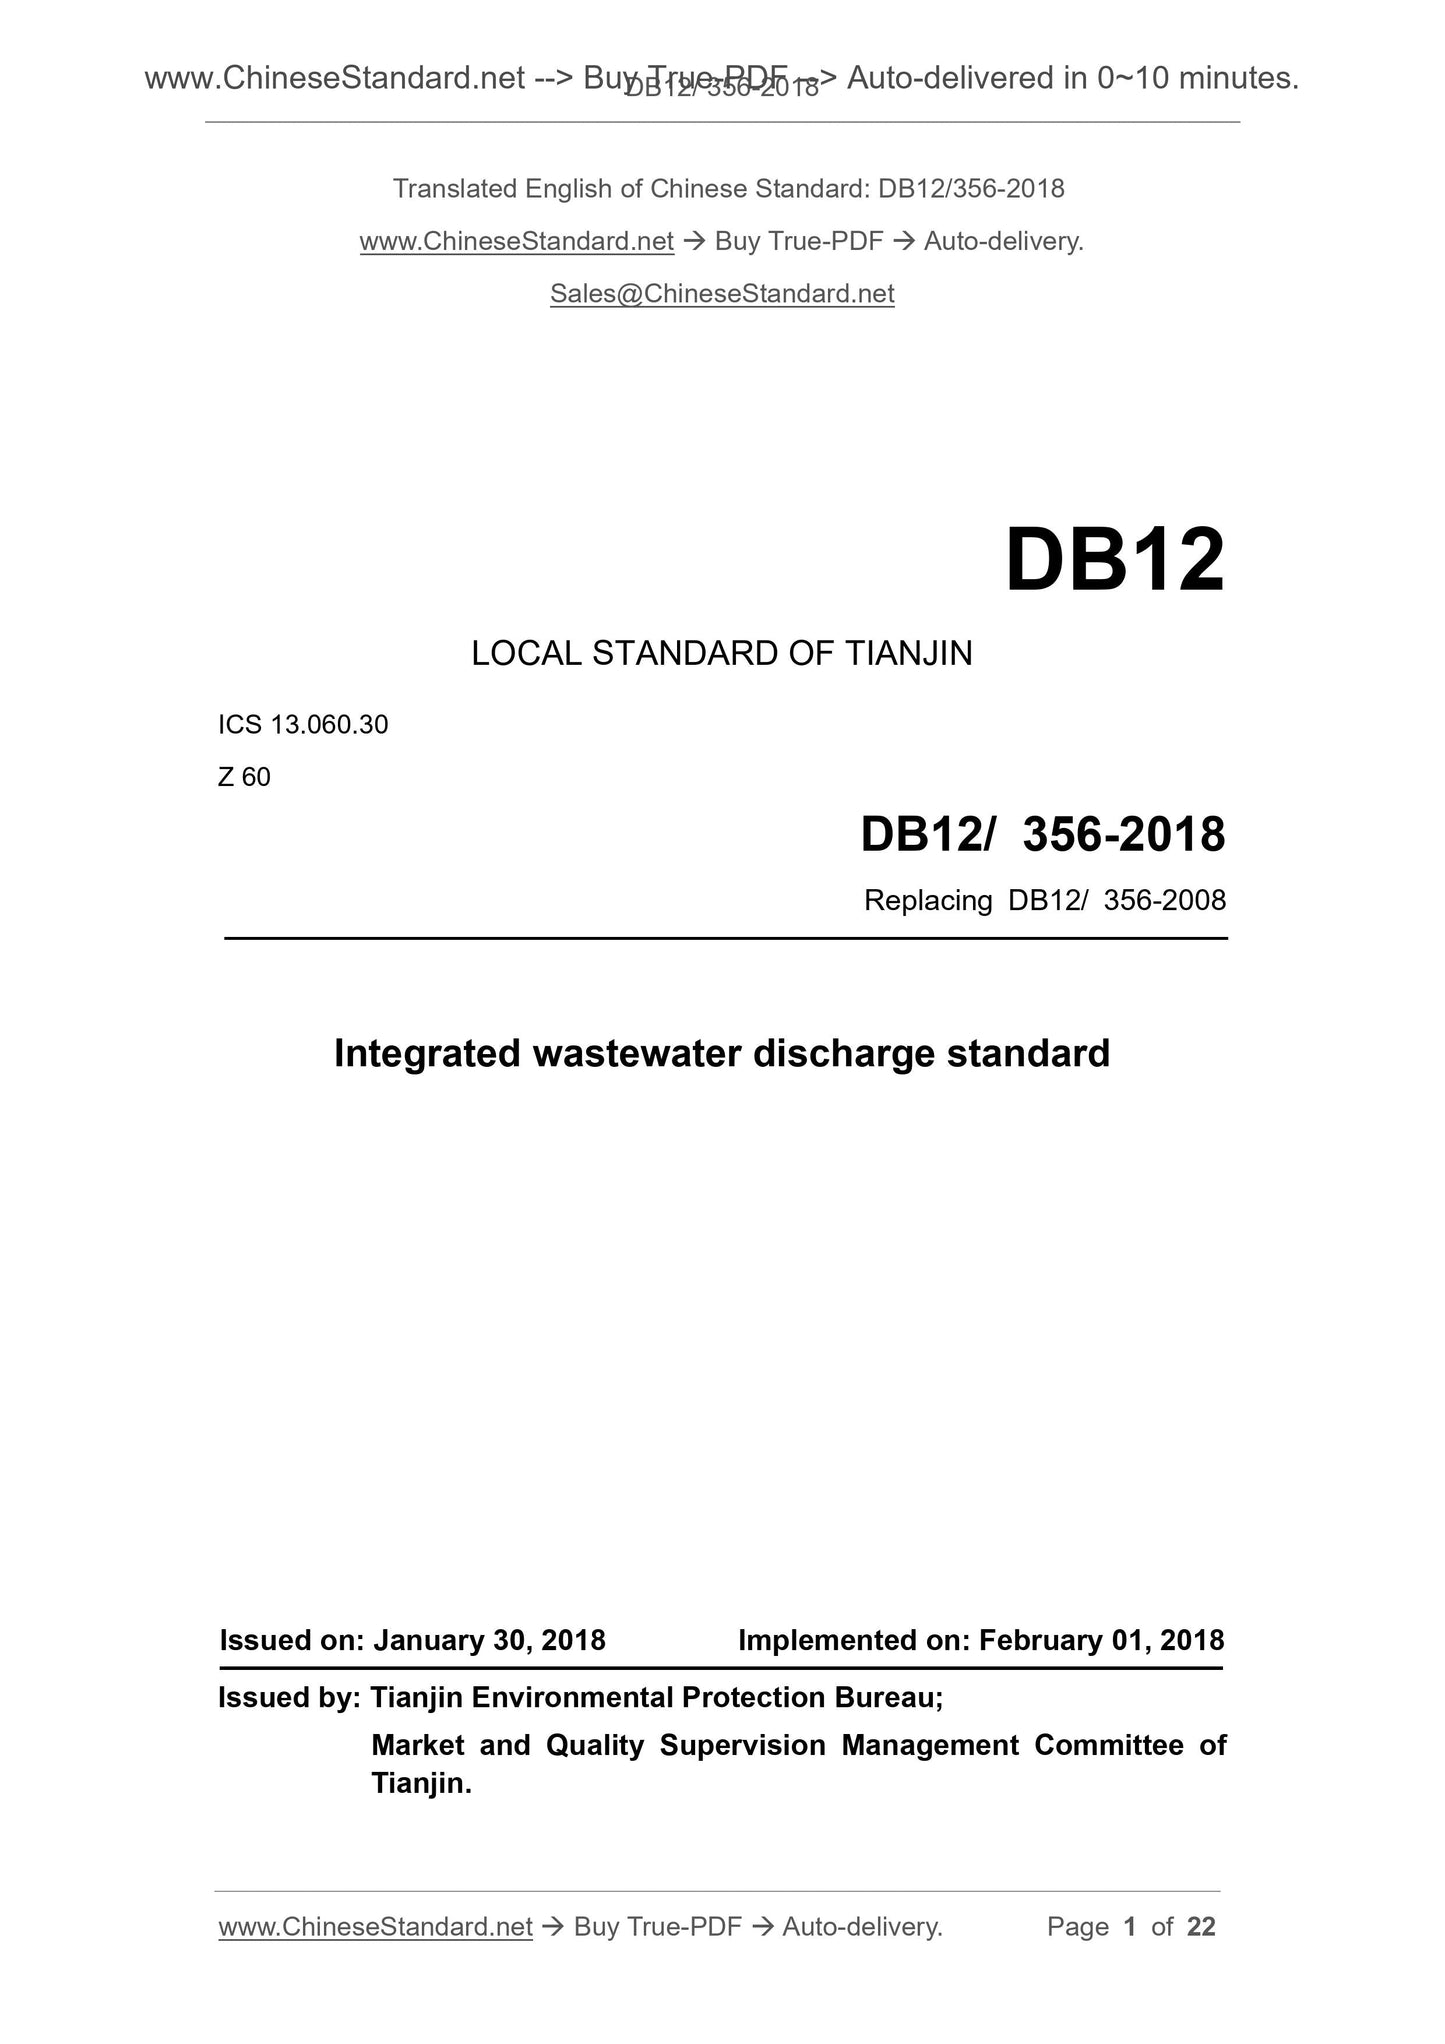 DB12/ 356-2018 Page 1